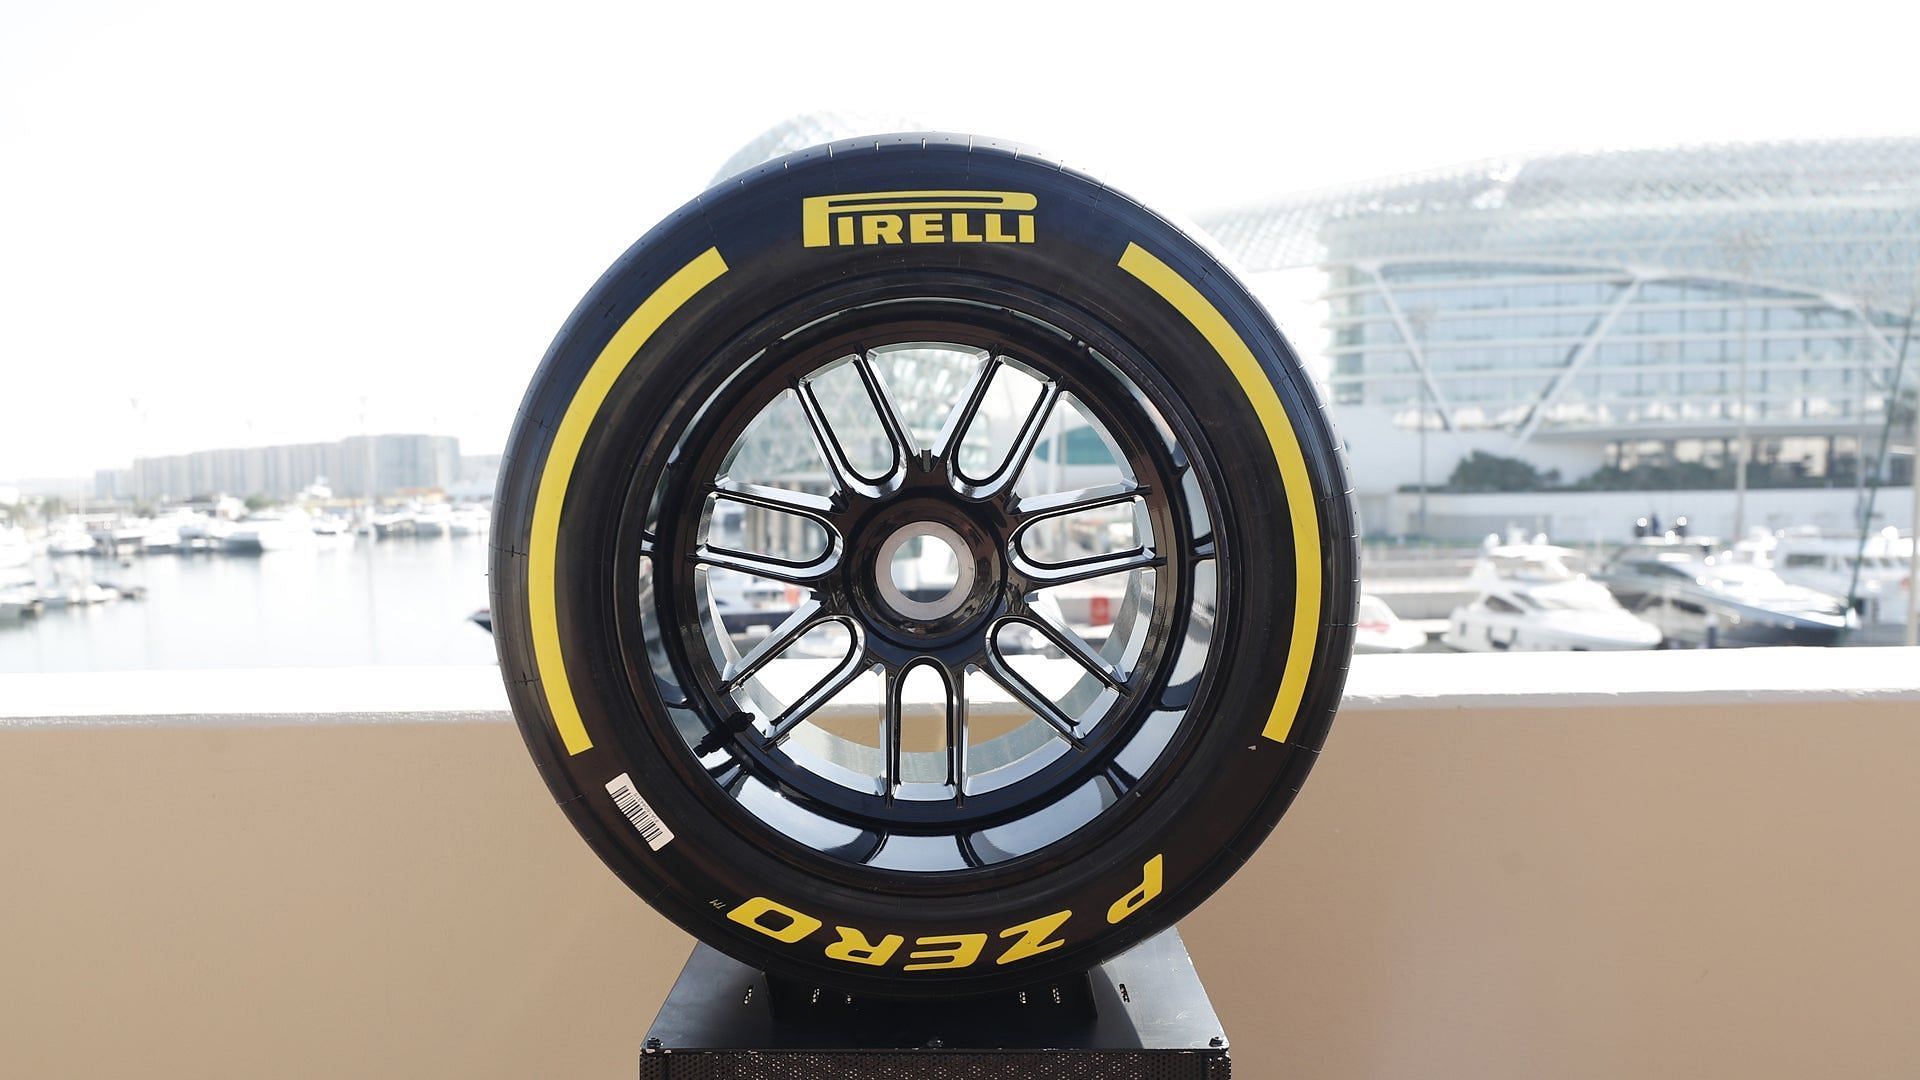 Enter caption The 2022 Pirelli F1 tyre displayed at the Abu Dhabi GP 2021 (Photos b Pirelli Images)